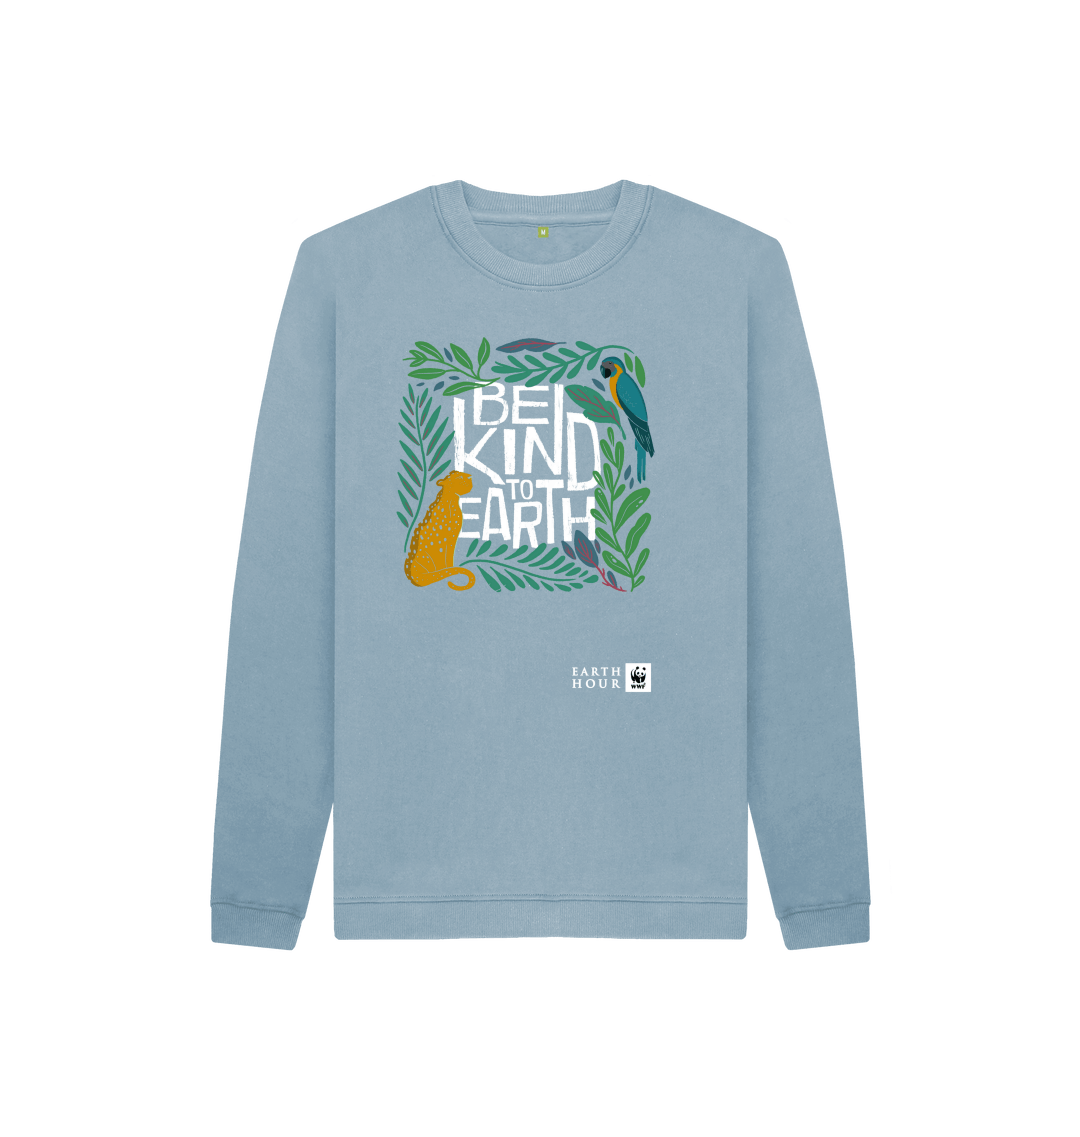 Be Kind Earth Kids Jumper | WWF International Store